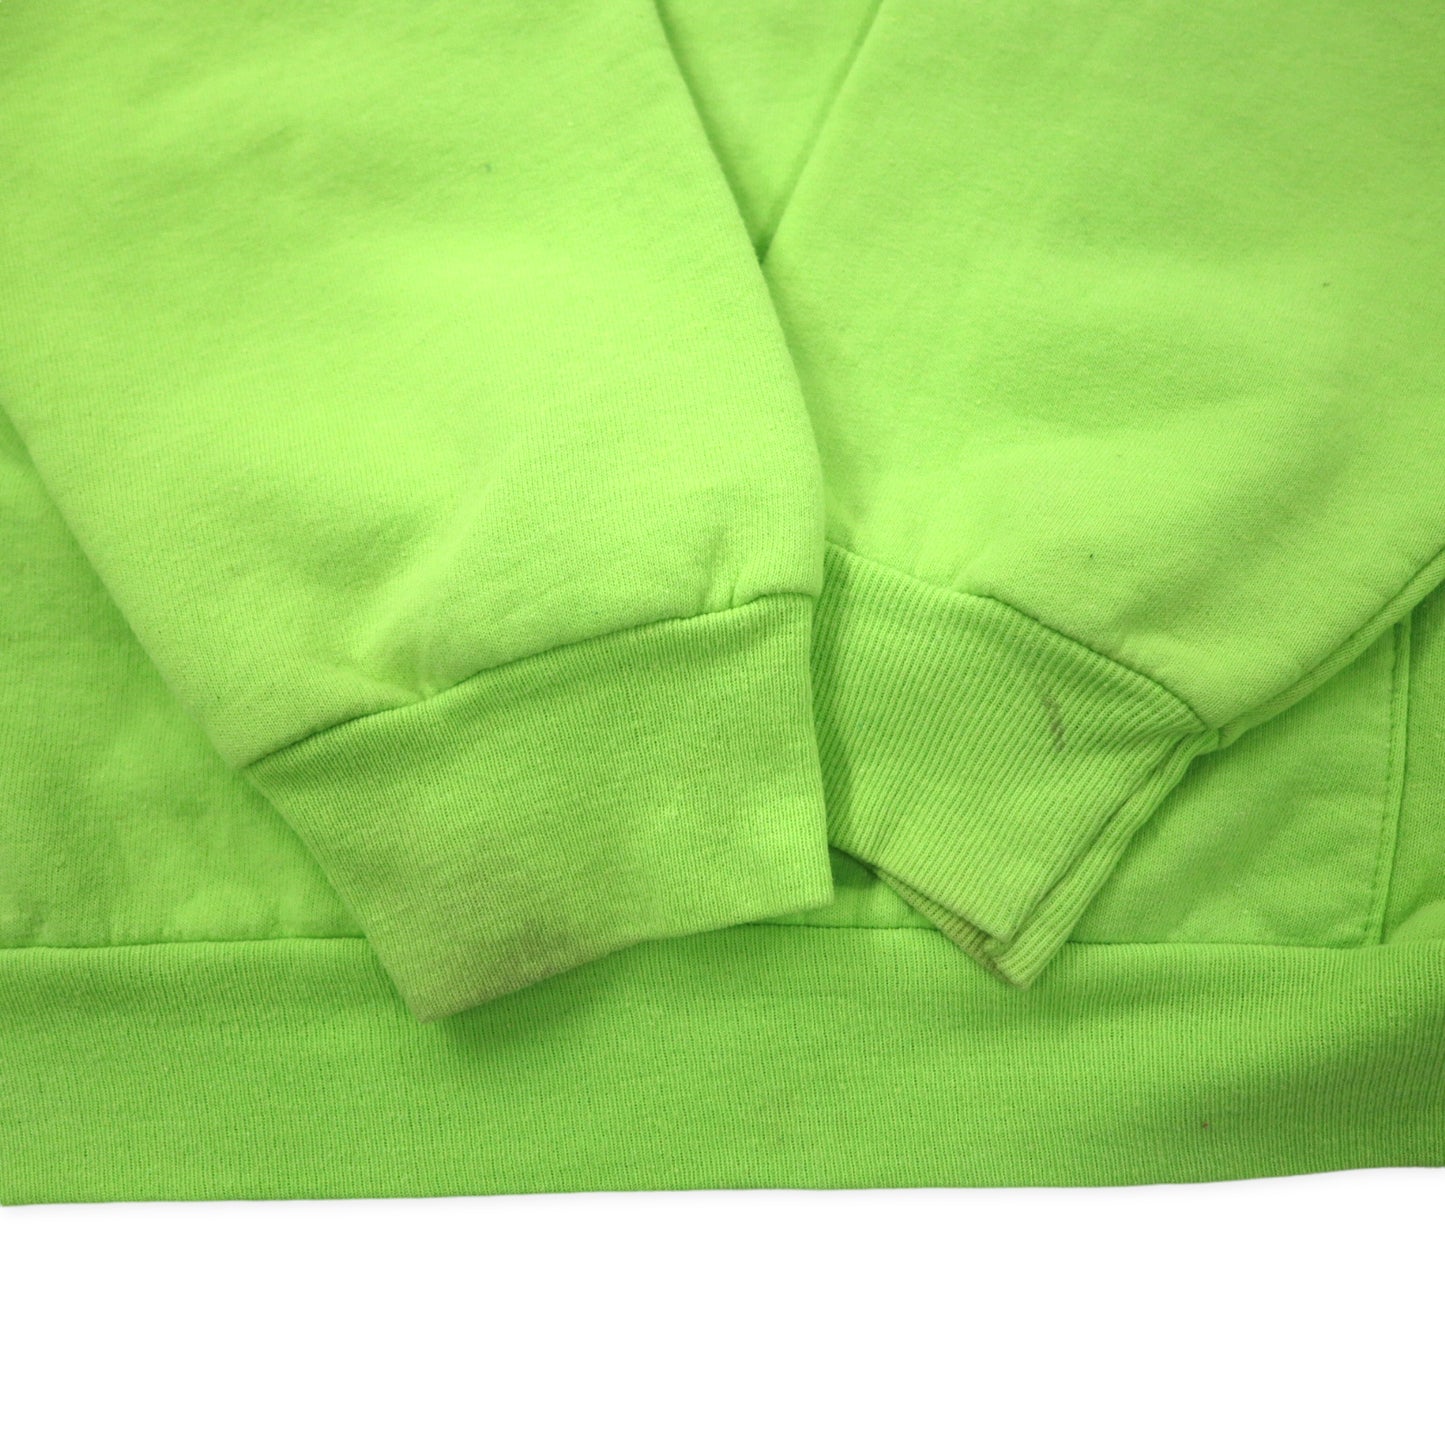 Collge Print Sweat Shirt カットオフ カレッジプリント スウェット XL グリーン コットン HIGHLAND PARK HAWKS